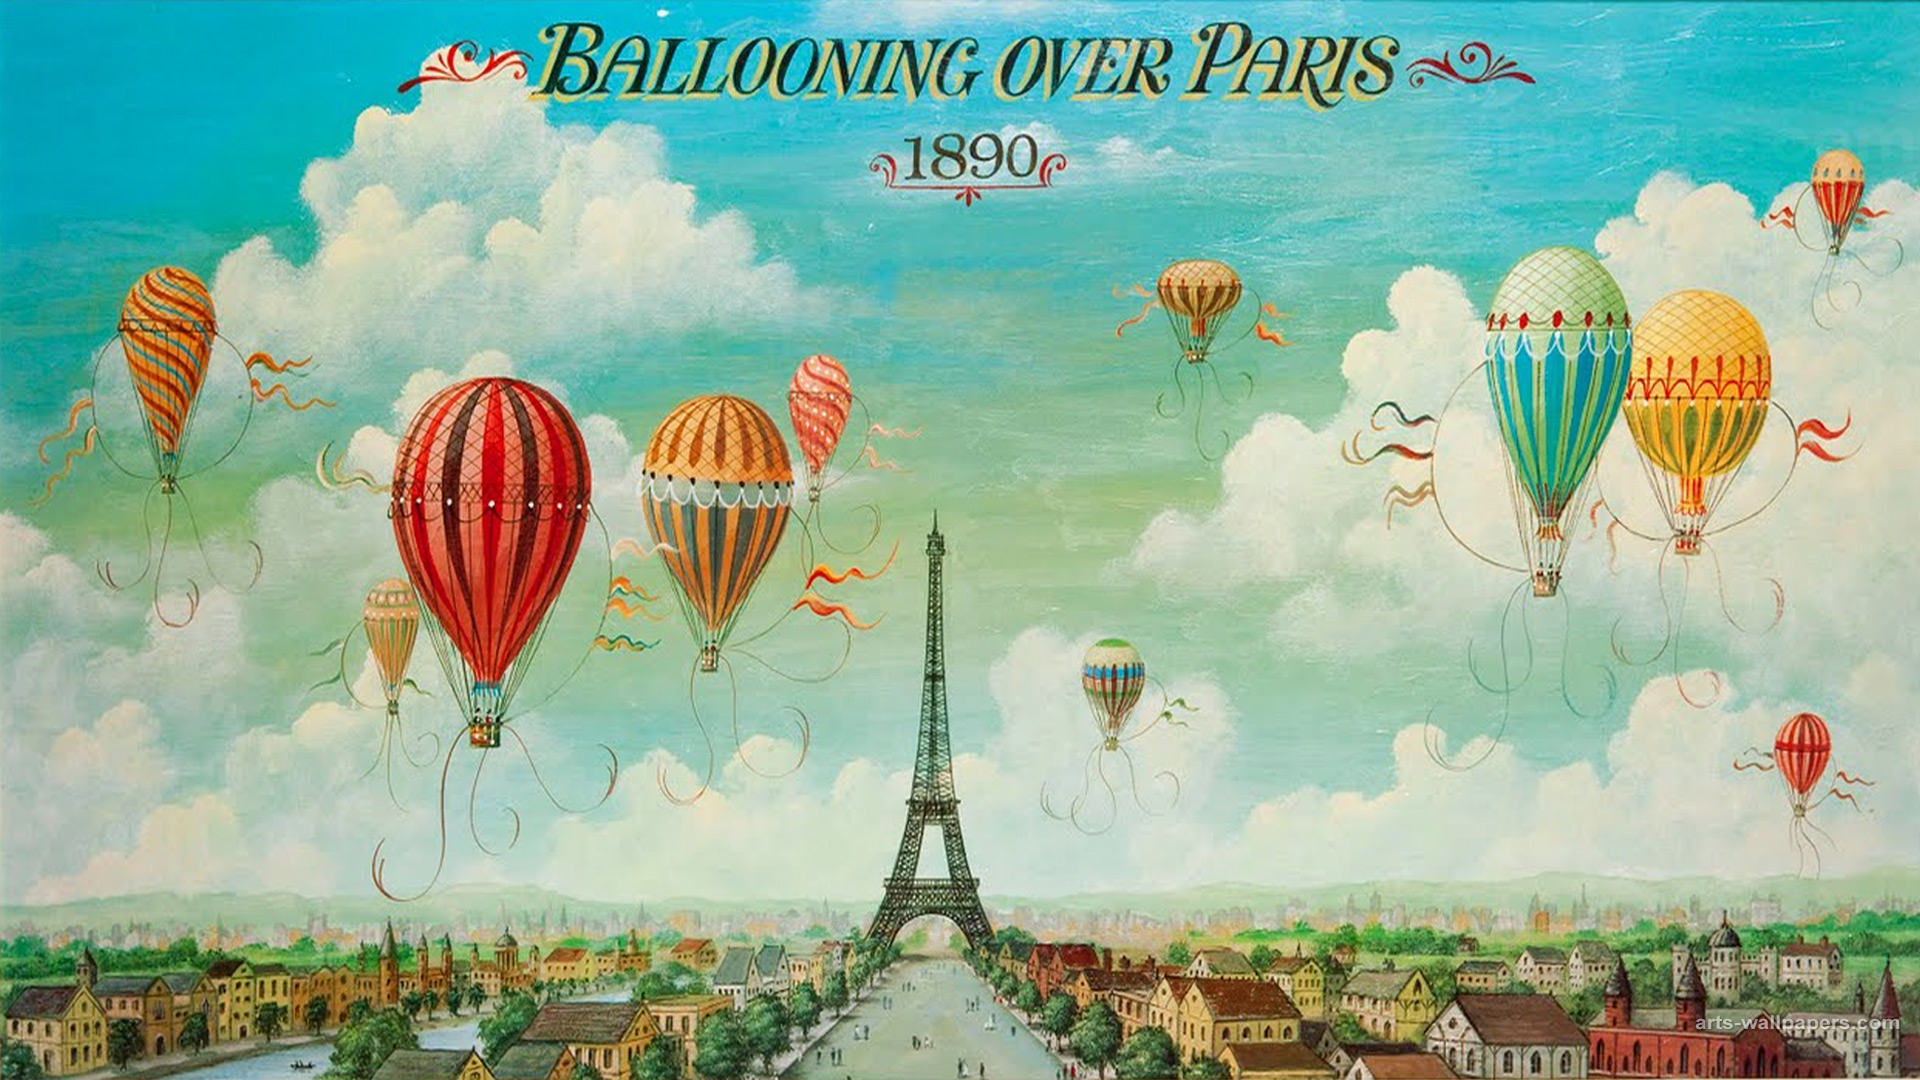 retro style paris with balloons art background